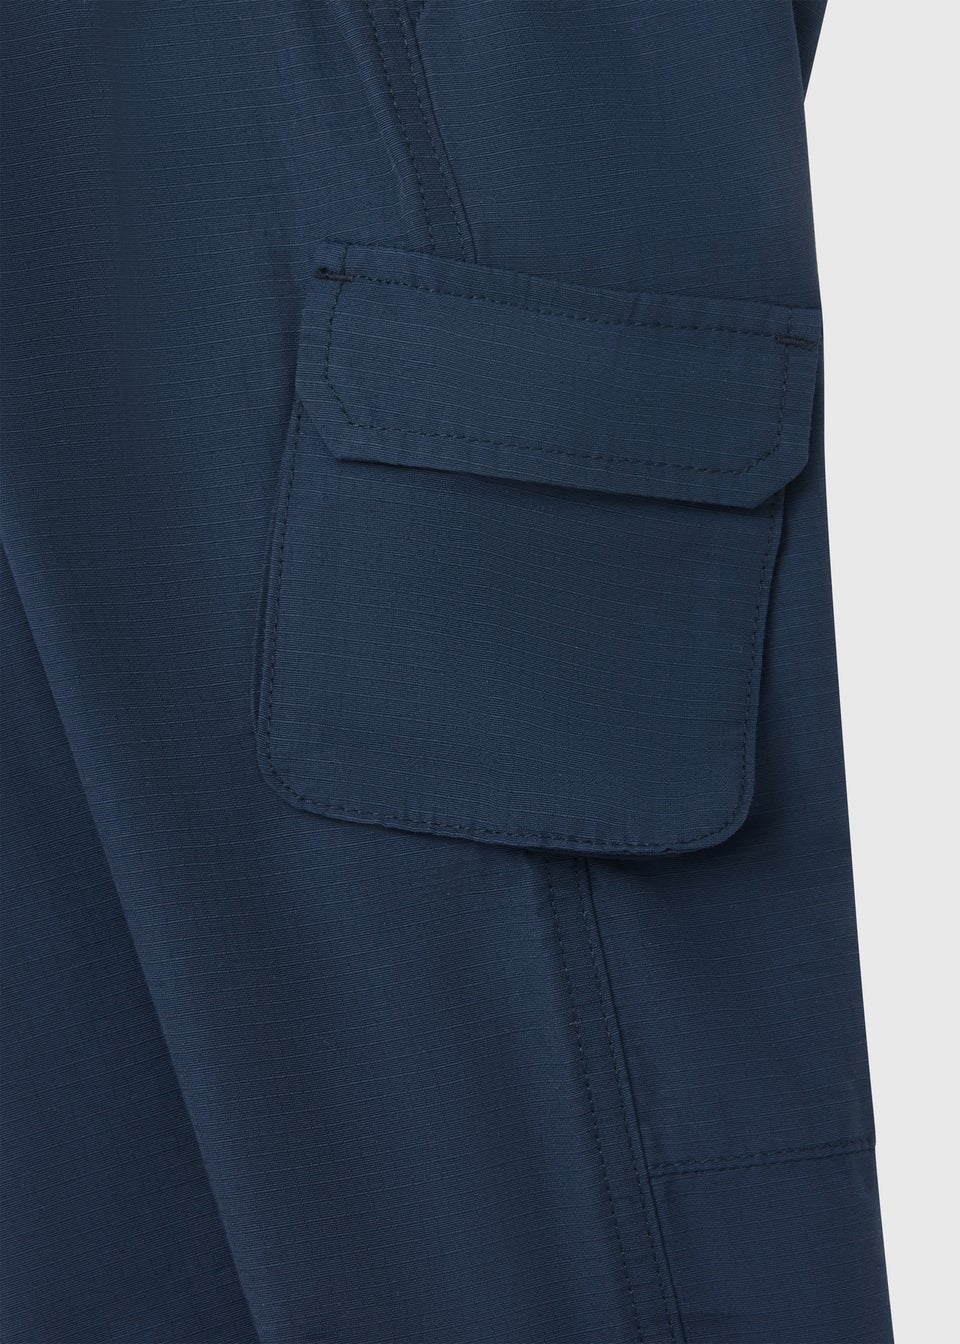 Boys Navy Cargo Trousers (1-7yrs)